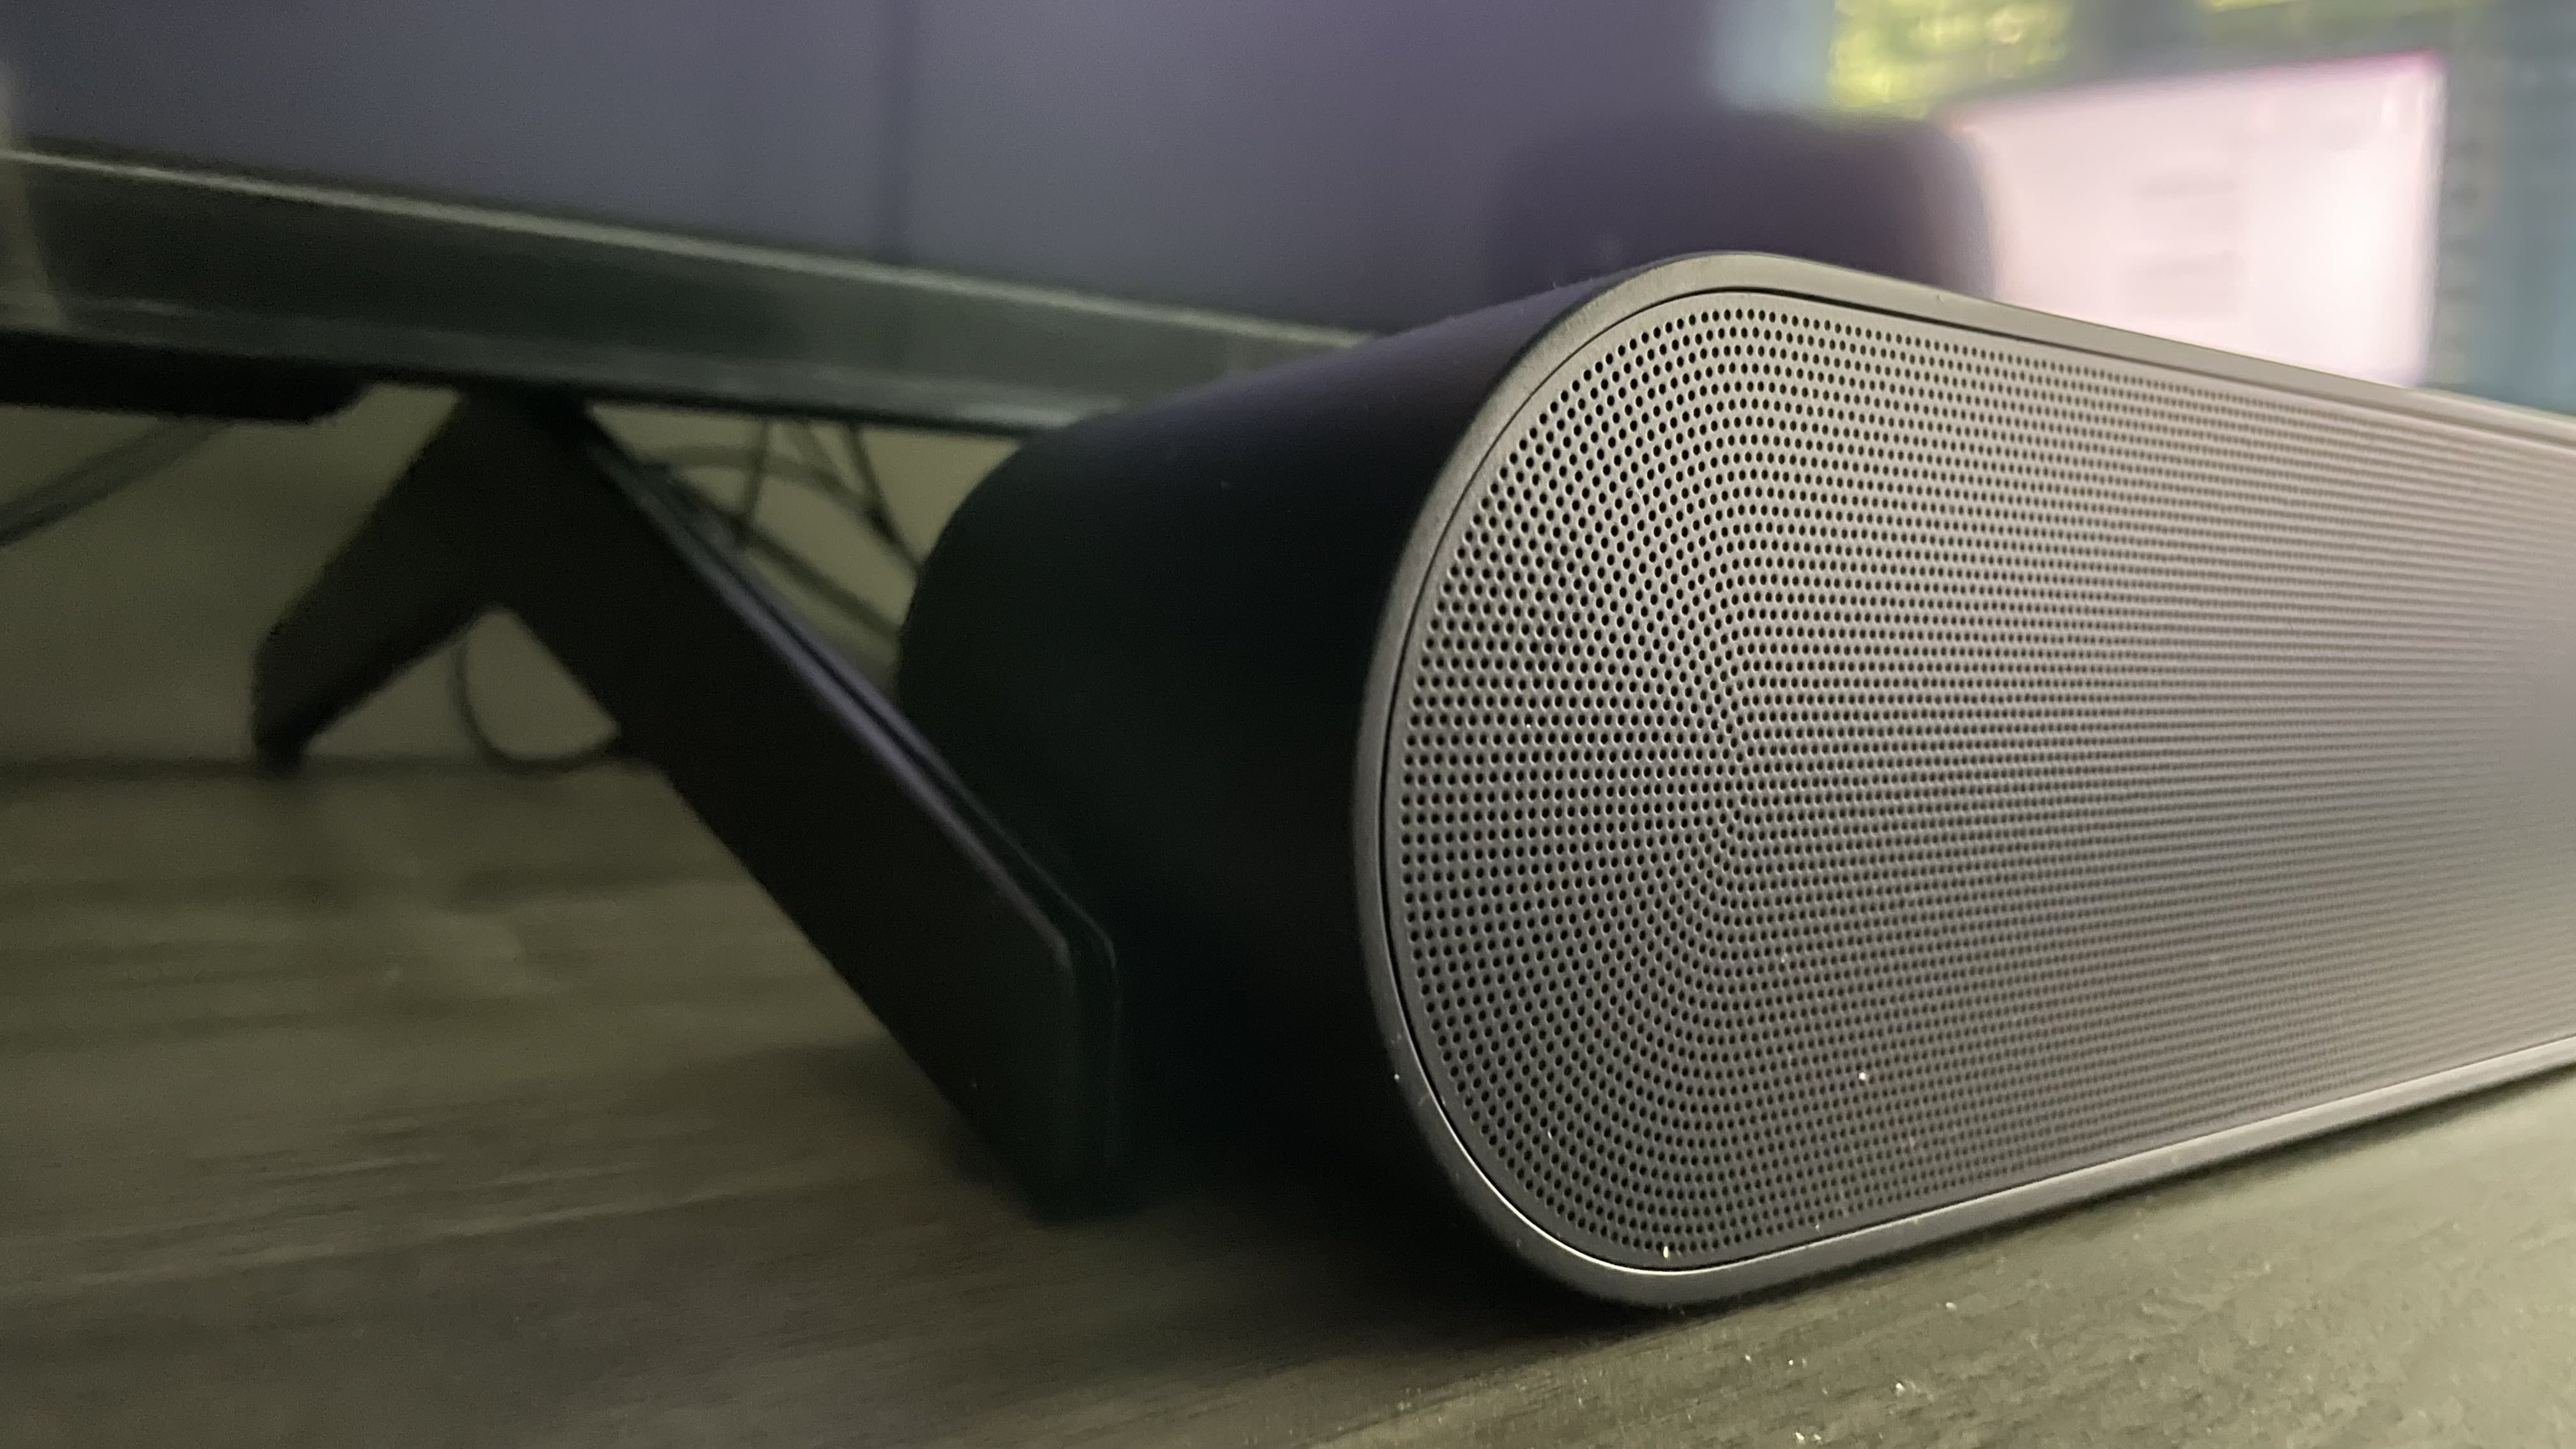 sadel stimulere manuskript Sonos Ray review: A great $279 soundbar for small rooms | CNN Underscored